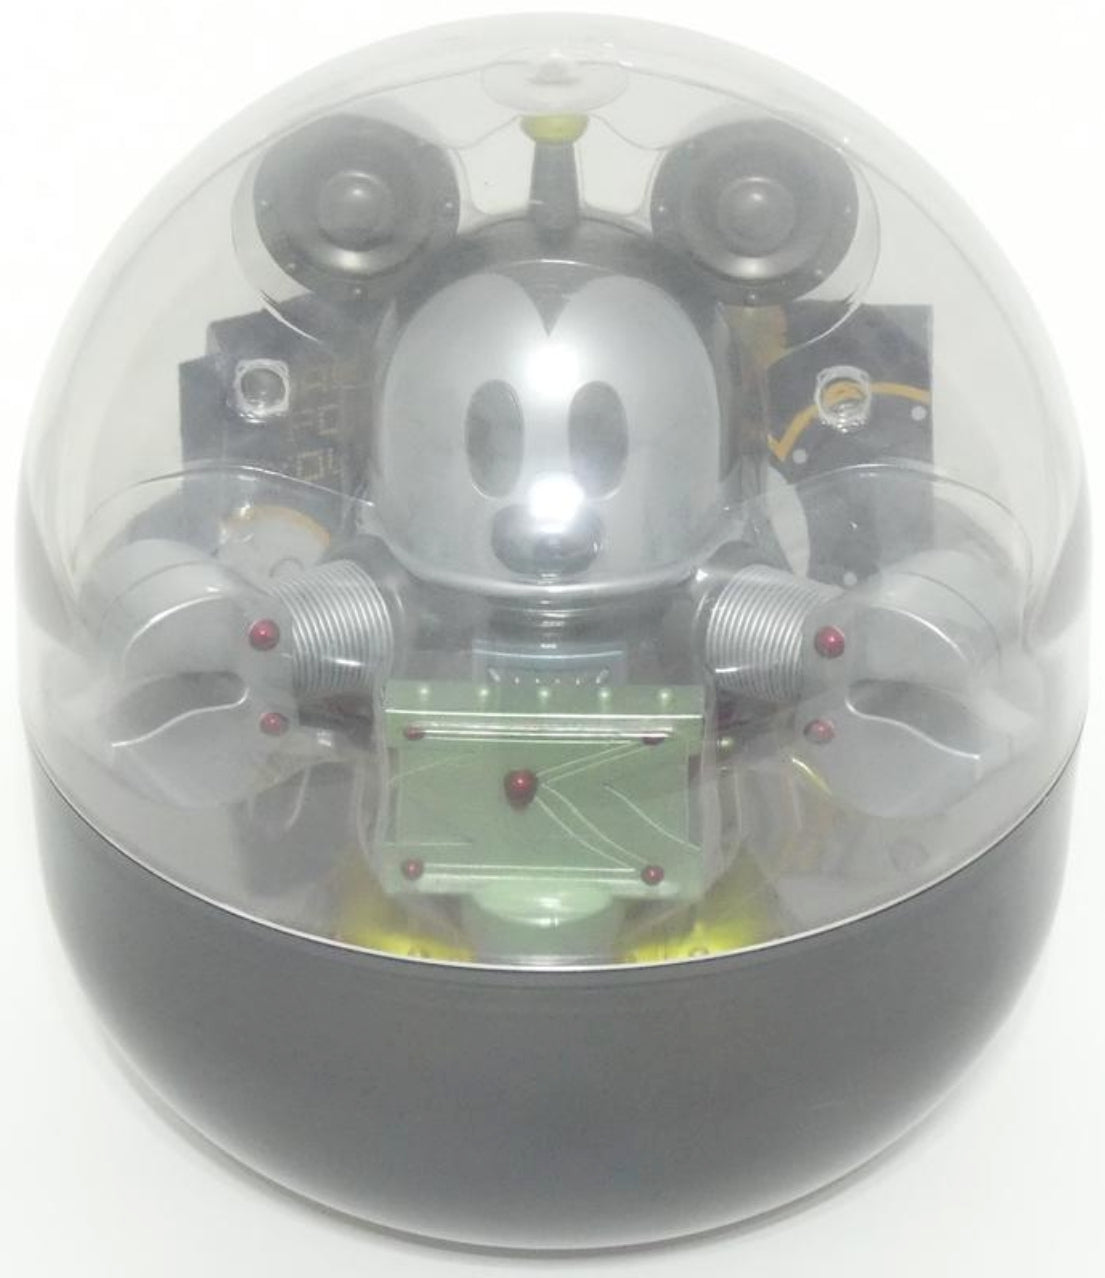 Yujin Disney 400% Box Gashapon Robo-D Mickey Mouse Action Figure